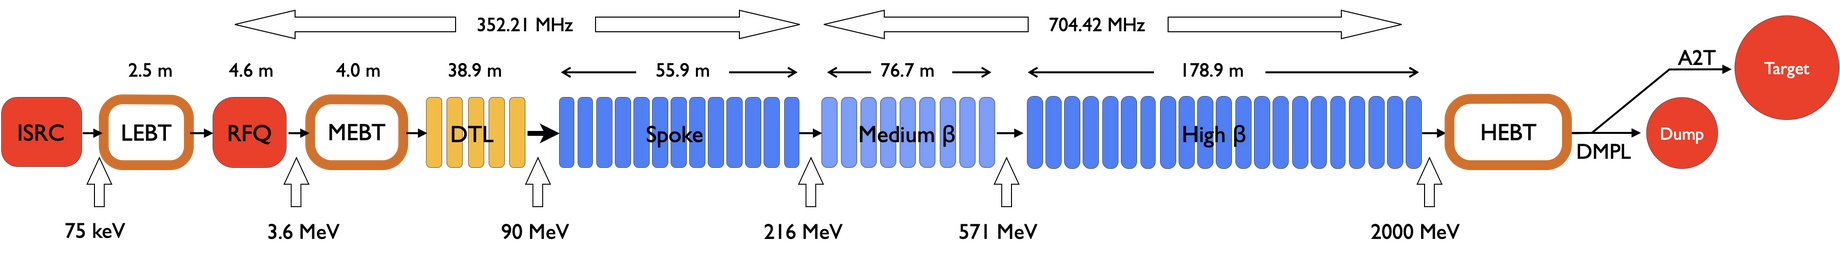 Accelerator schematic